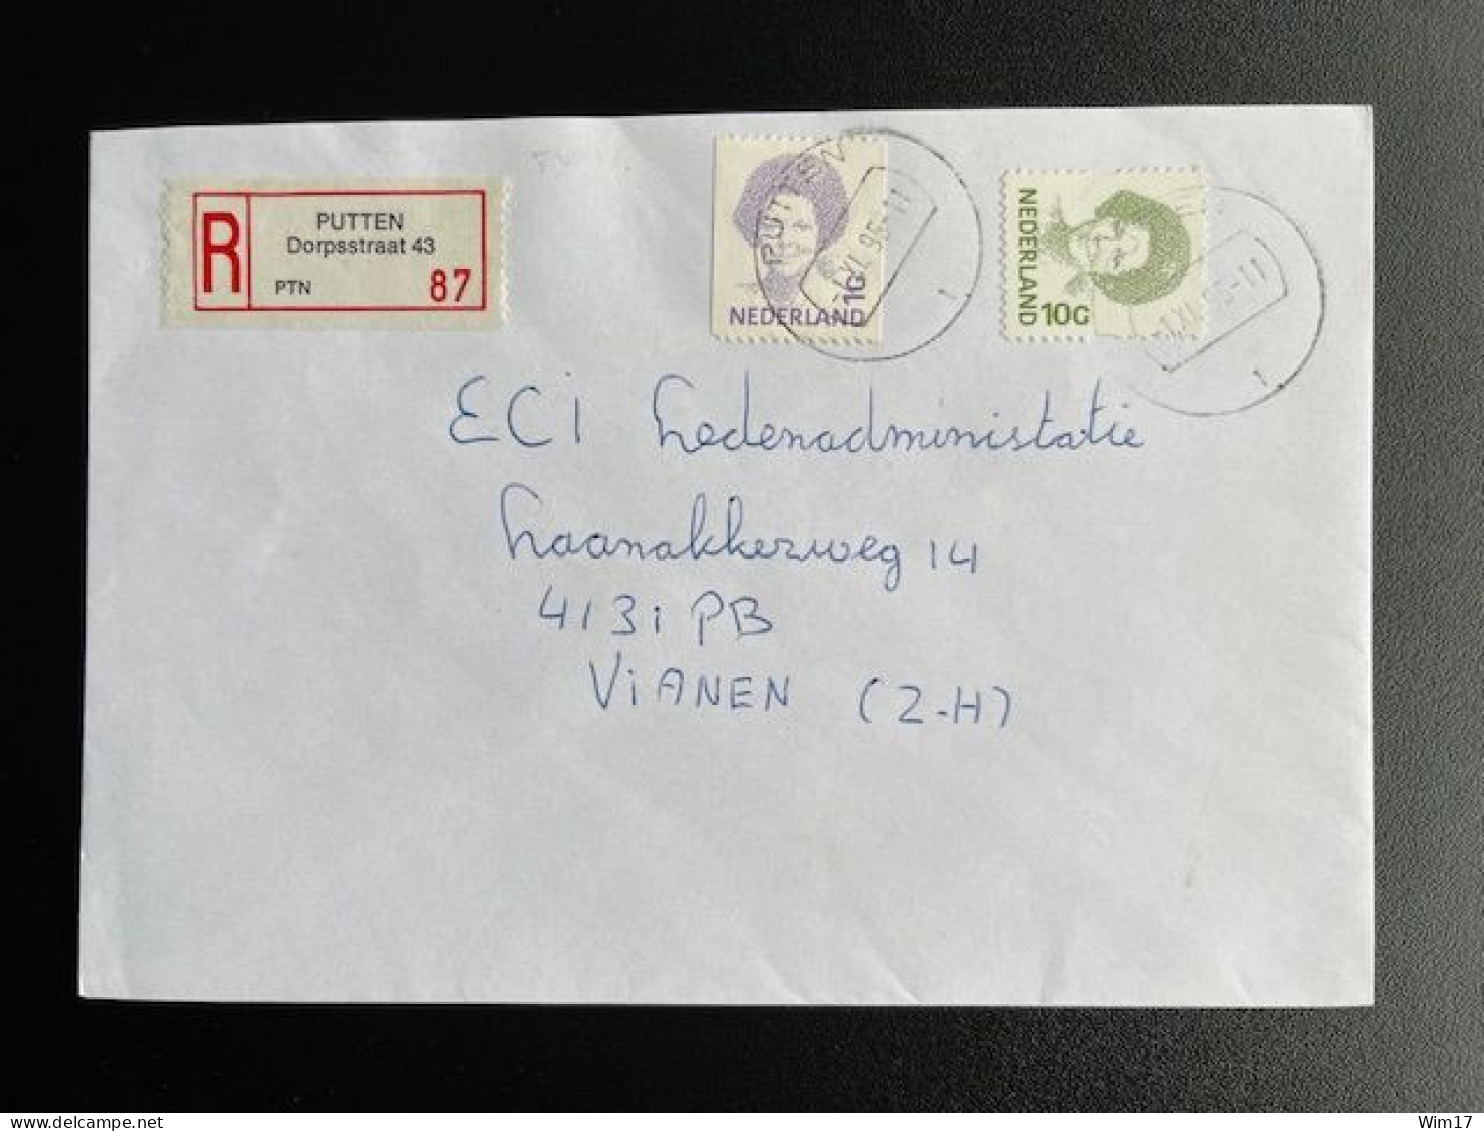 NETHERLANDS 1995 REGISTERED LETTER PUTTEN DORPSSTRAAT TO VIANEN 01-11-1995 NEDERLAND AANGETEKEND - Lettres & Documents